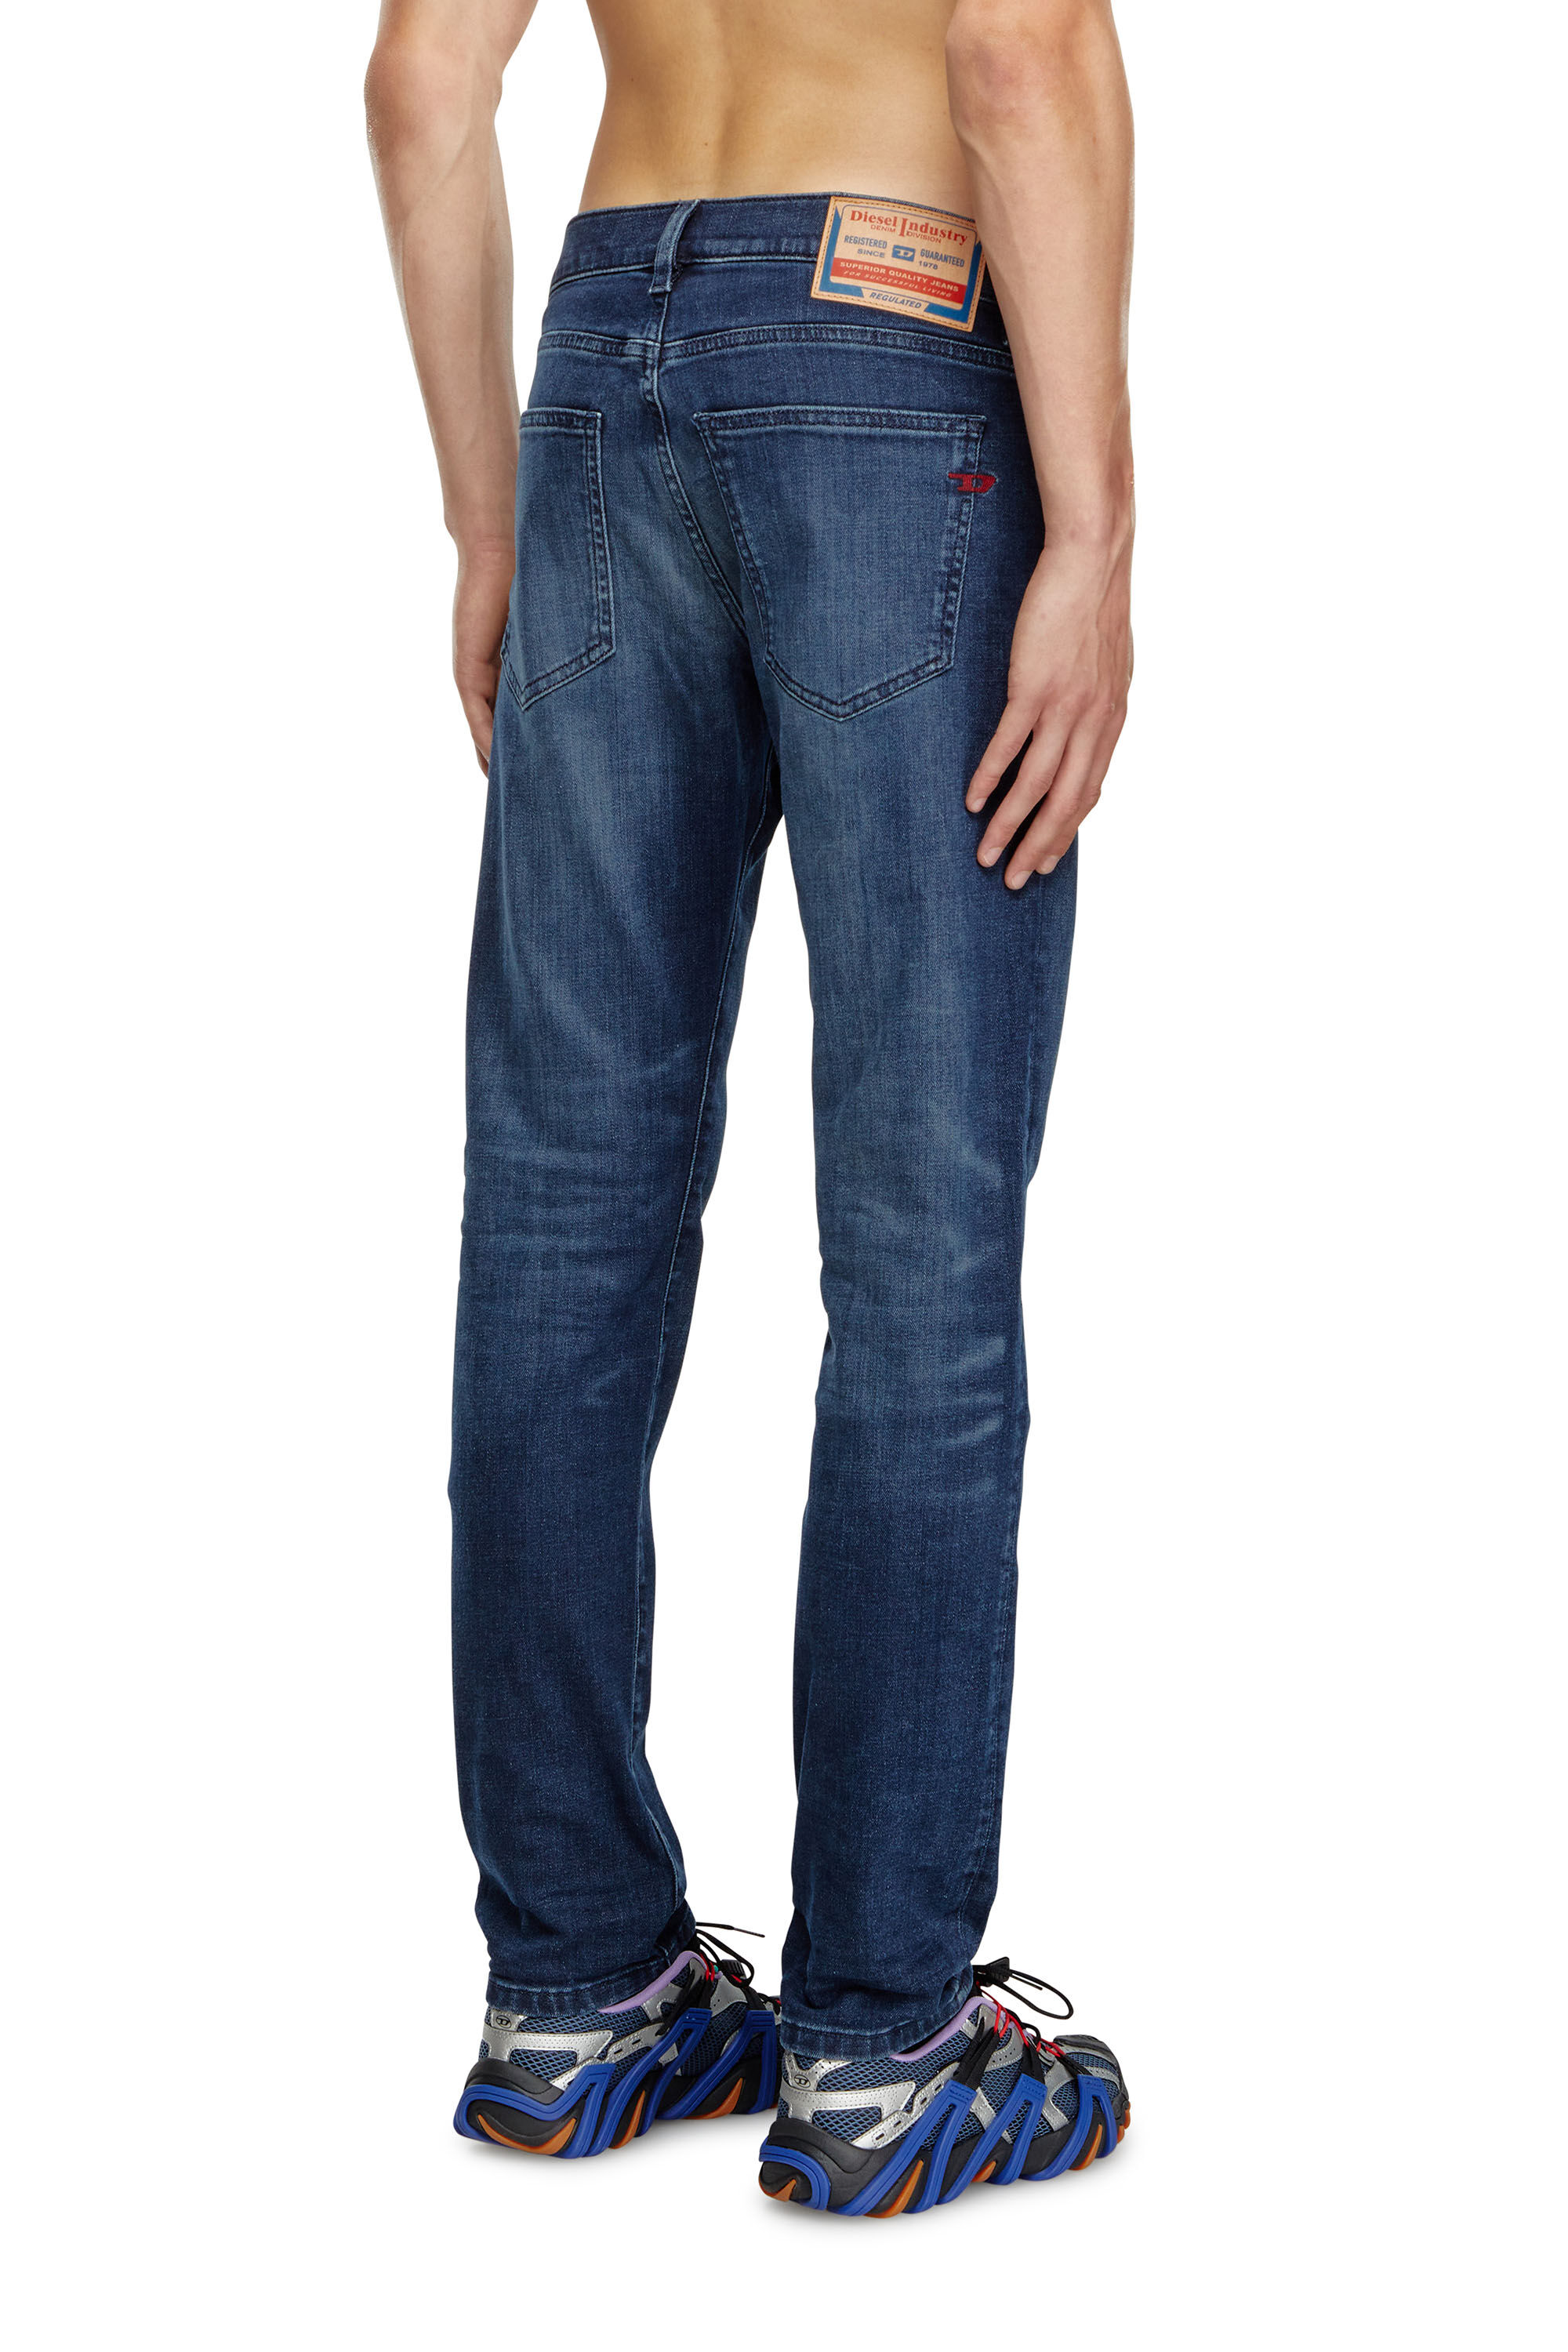 Diesel - Slim Jeans 2019 D-Strukt 0GRDJ, Hombre Slim Jeans - 2019 D-Strukt in Azul marino - Image 4